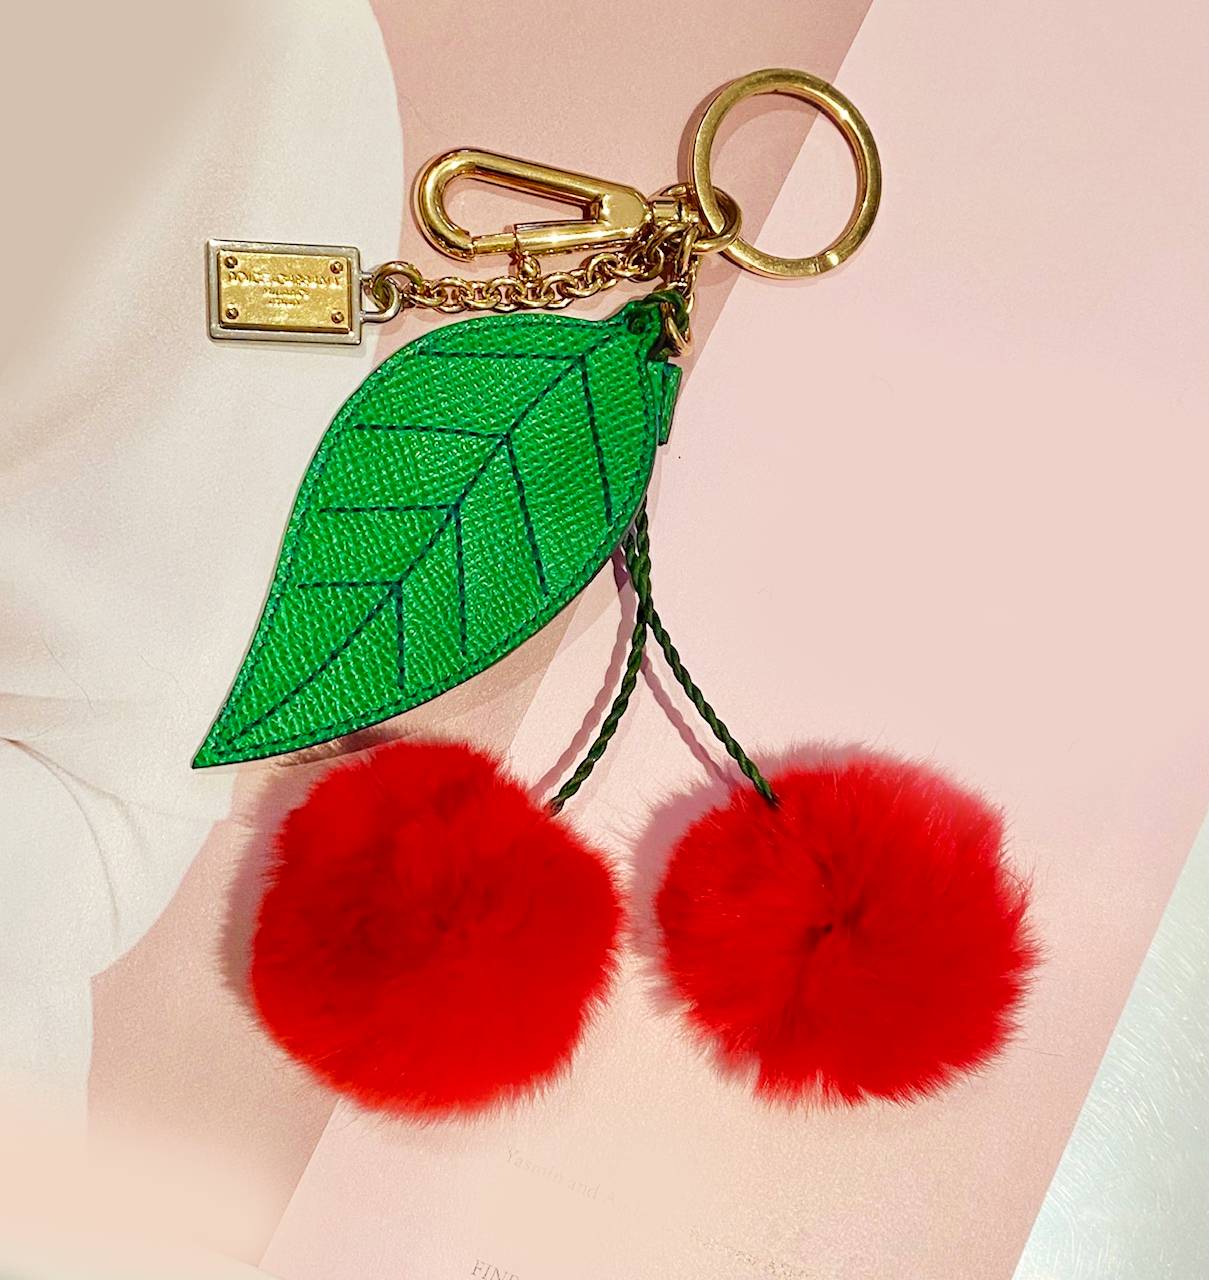 Dolce & Gabbana Red Cherry Pom Pom Gold Tone Key Ring / Bag Charm - style - CHNGR